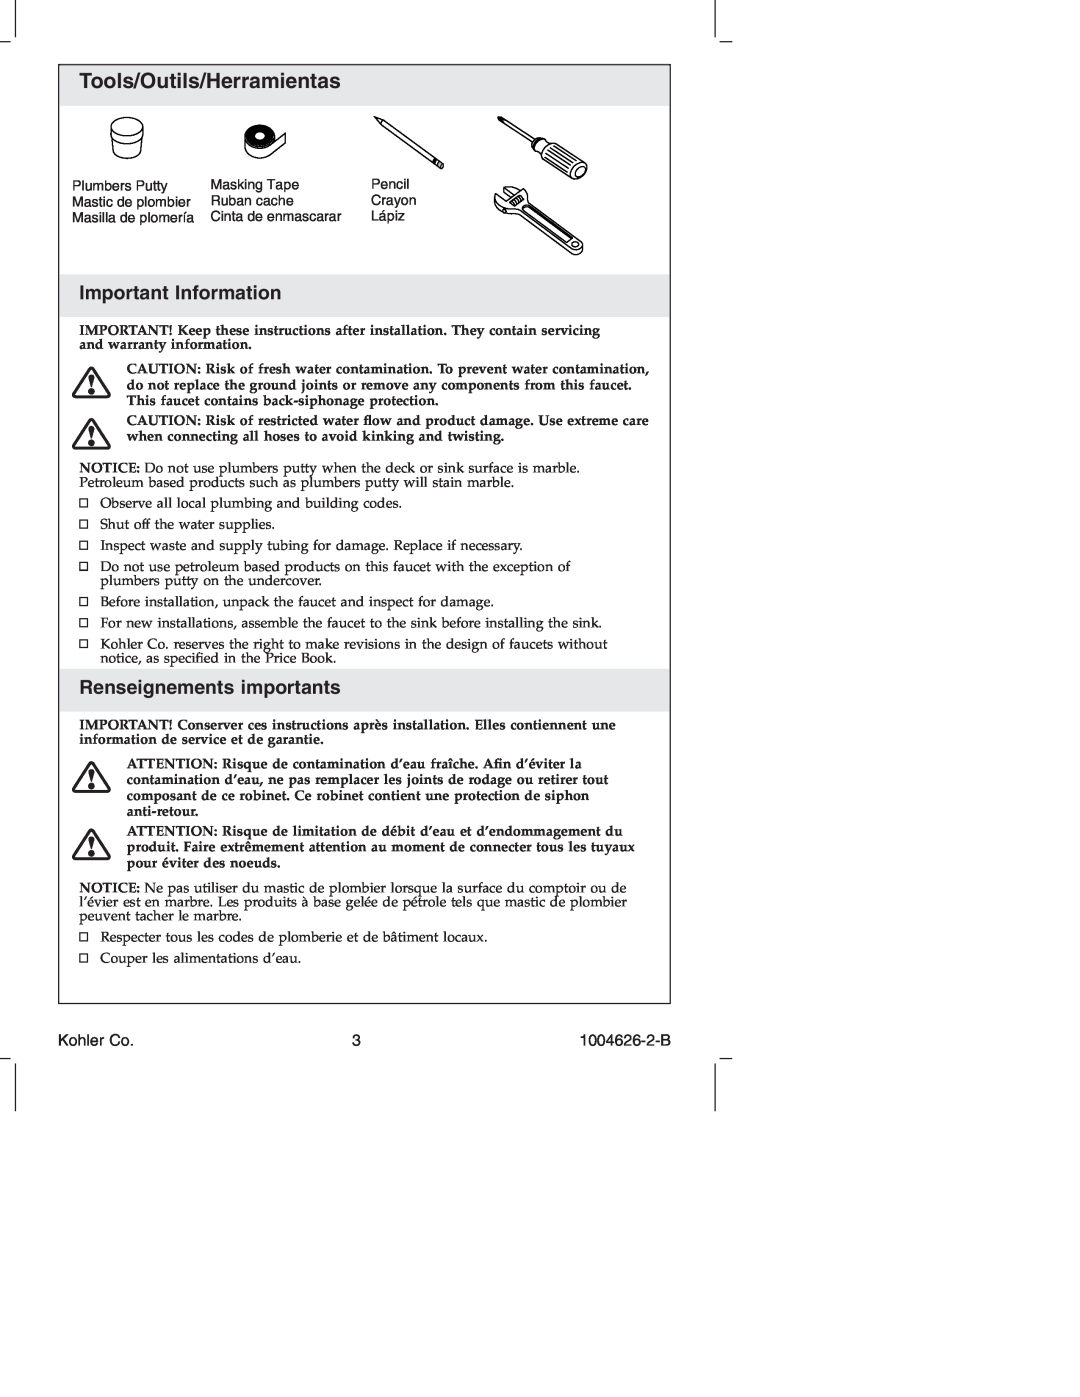 Kohler K-12177 manual Important Information, Renseignements importants, Kohler Co, Tools/Outils/Herramientas 